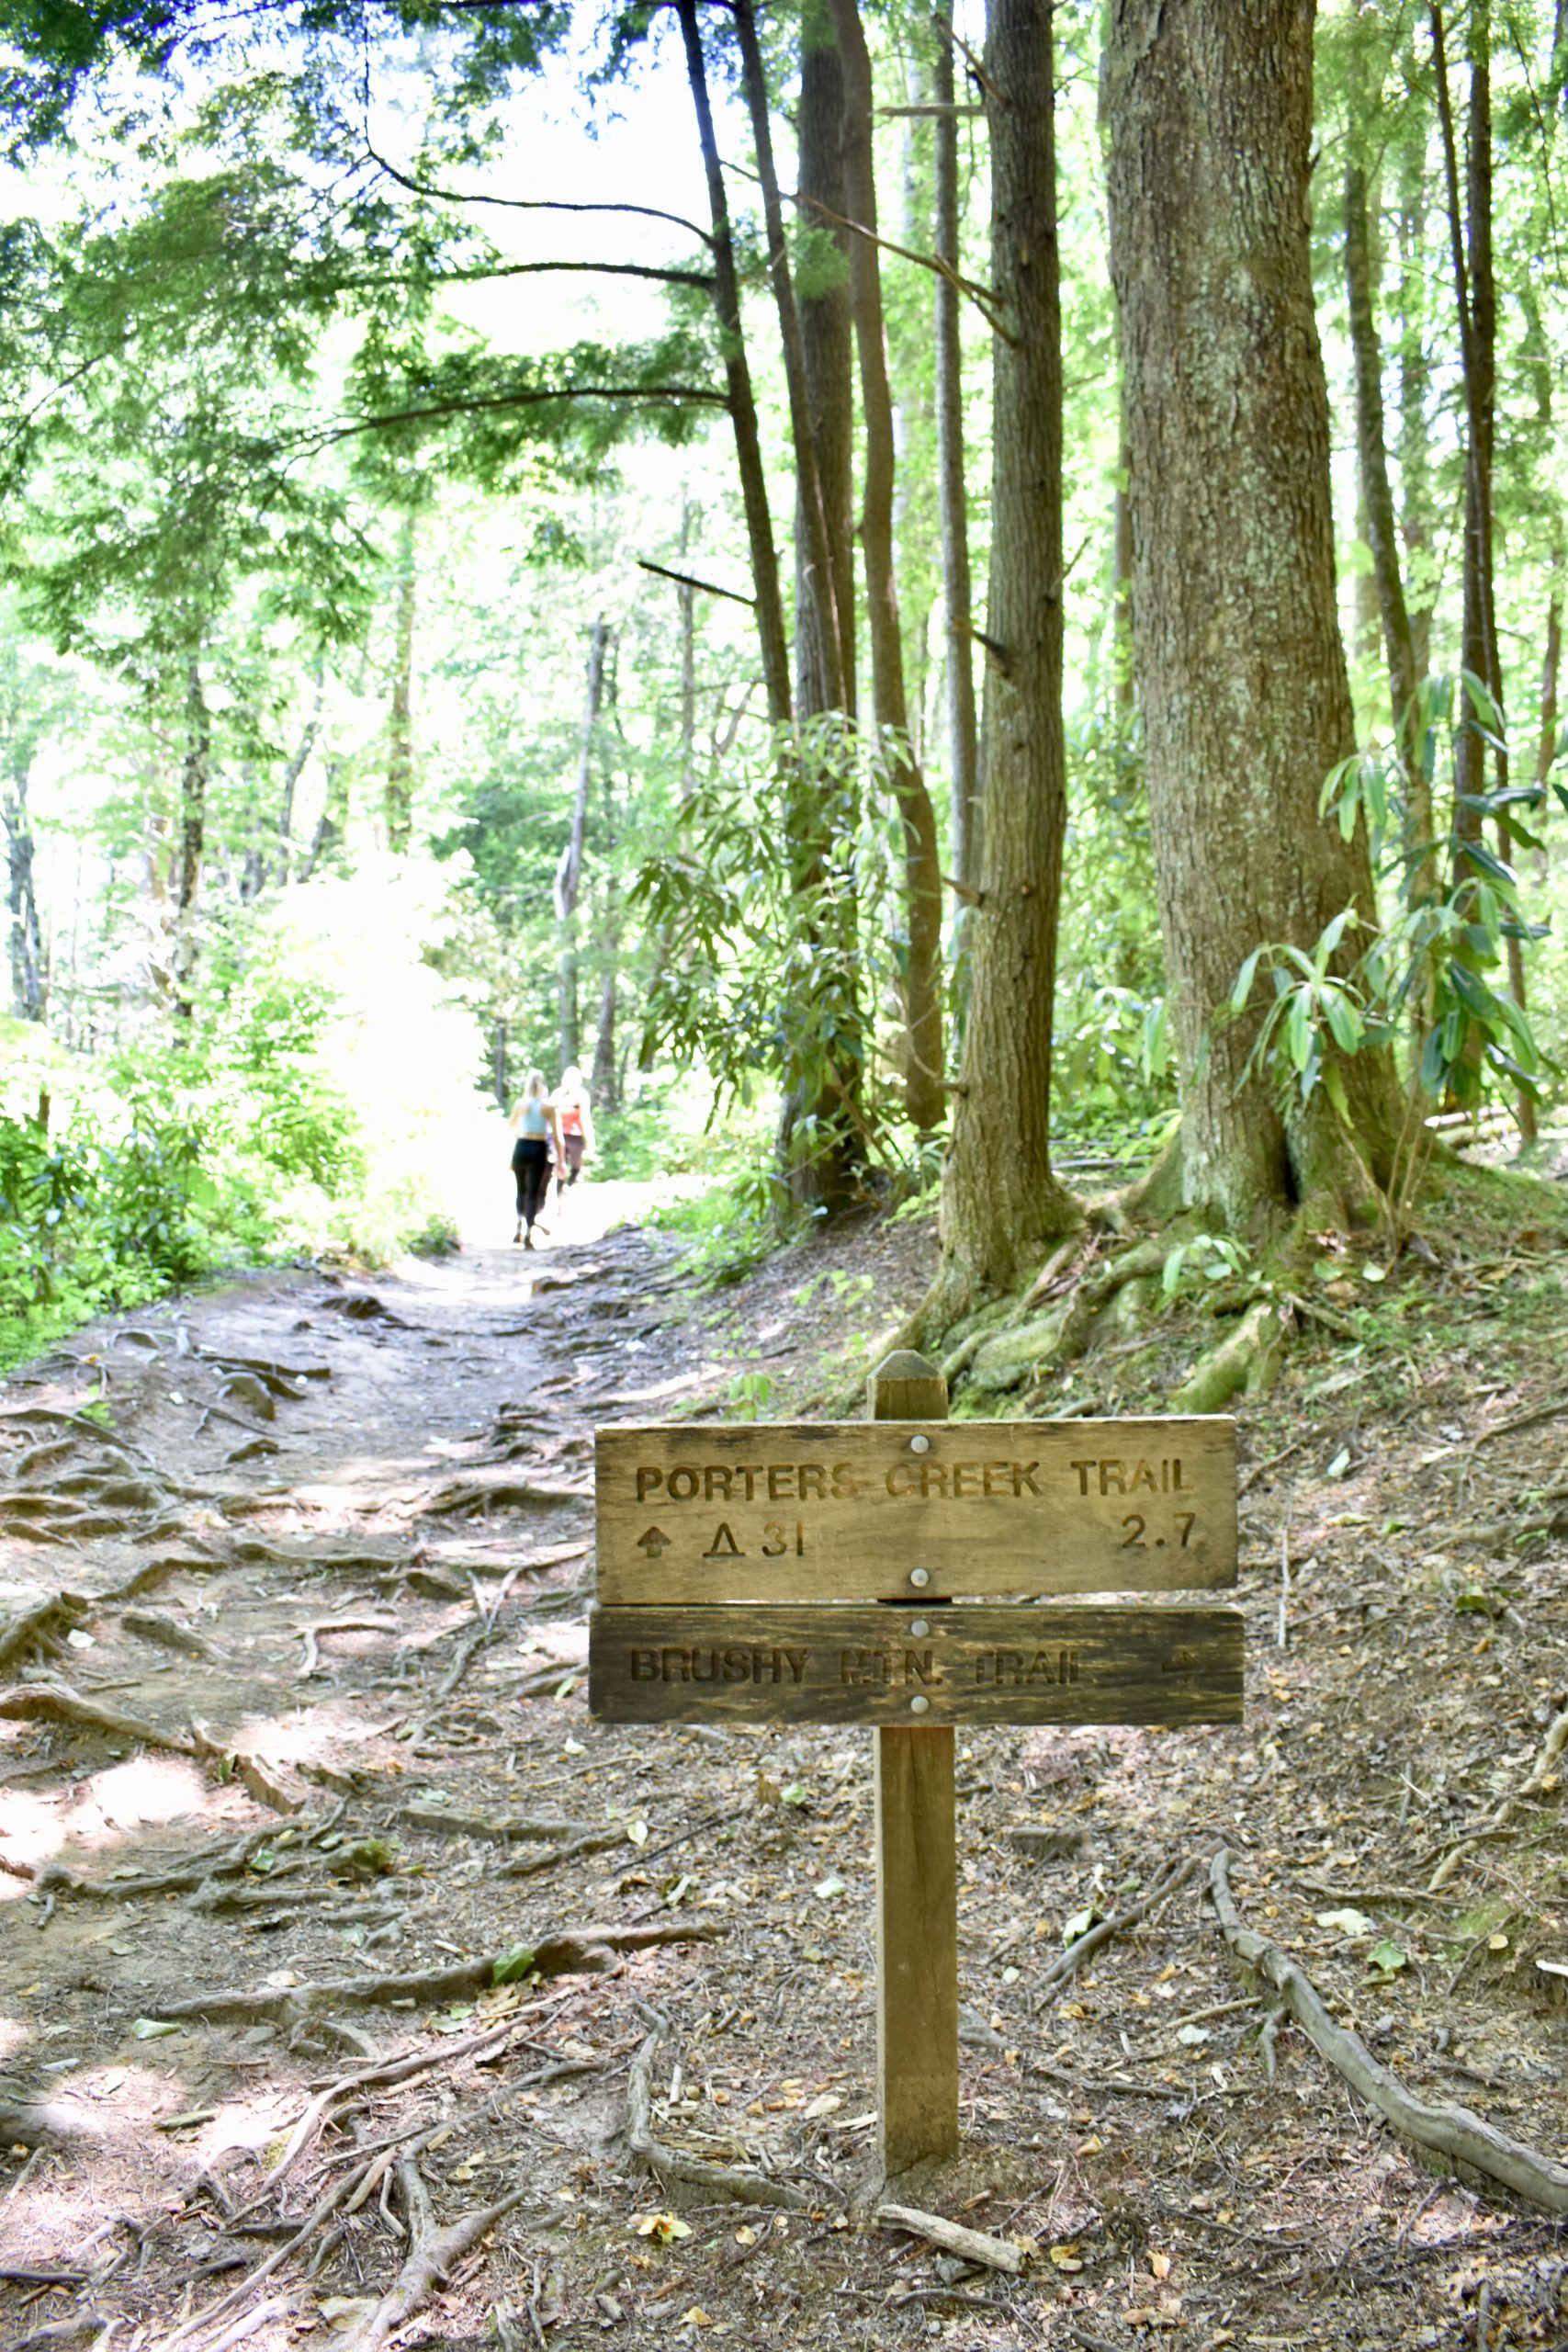 Porter's Creek Trail